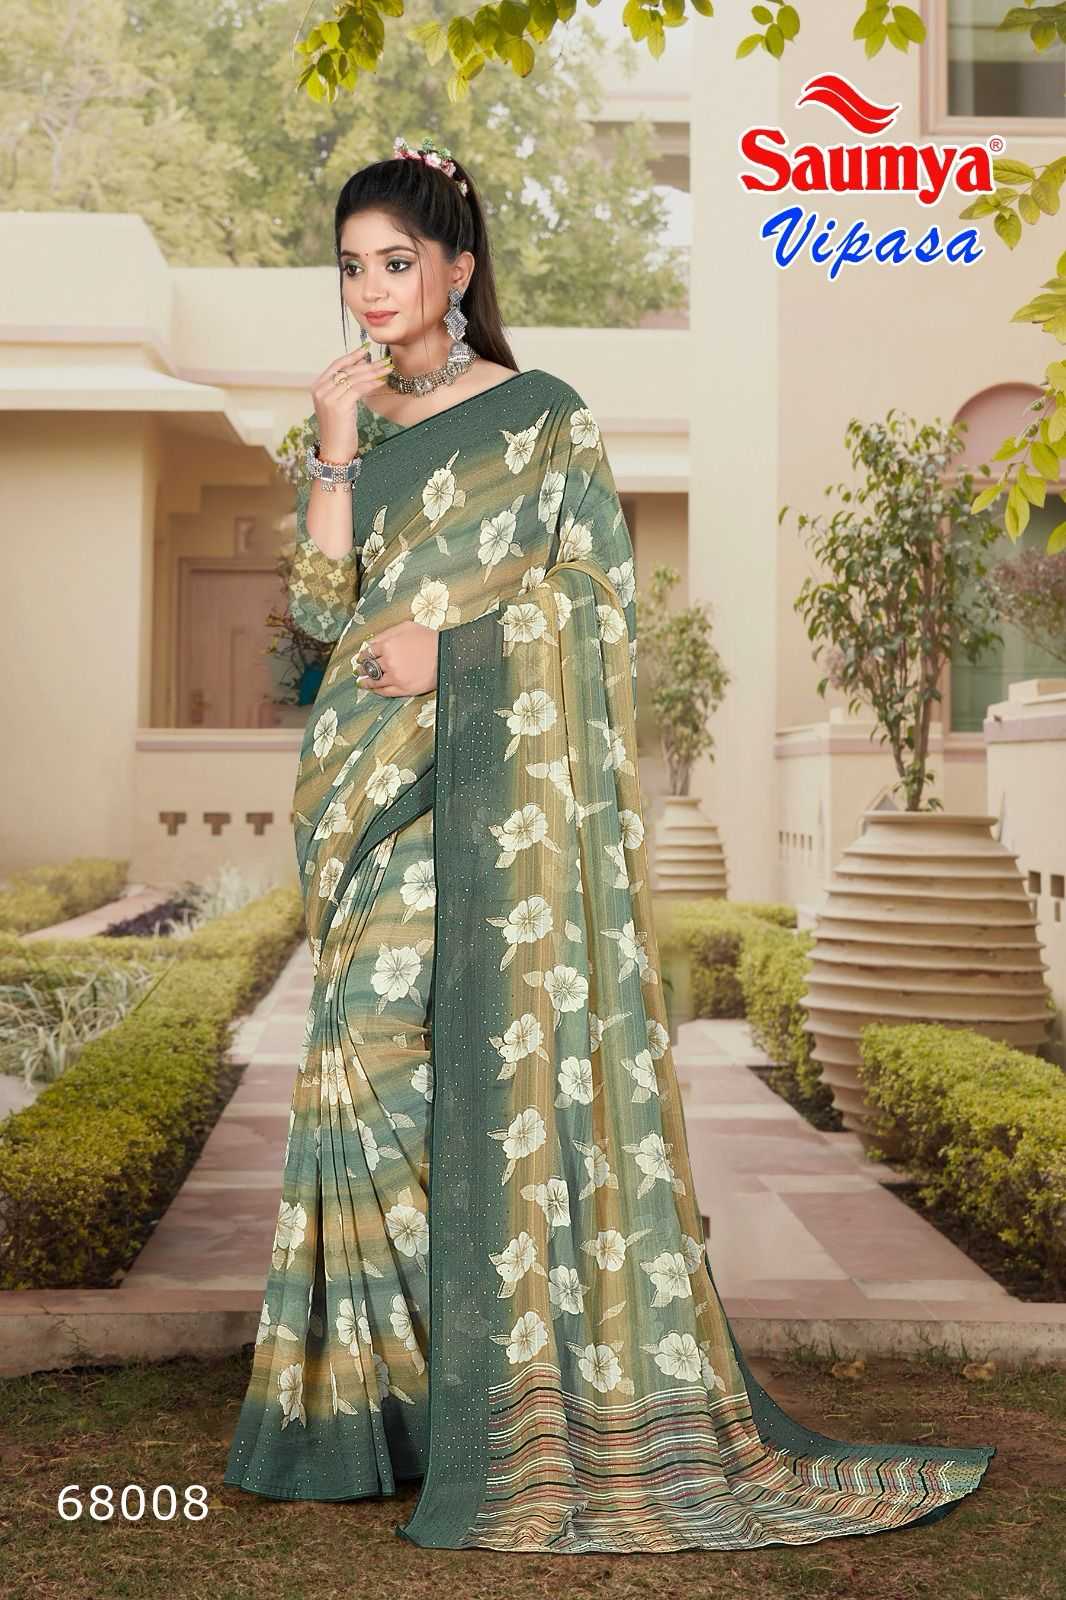 vipasa by saumya beautiful casual wear print with jari sarees